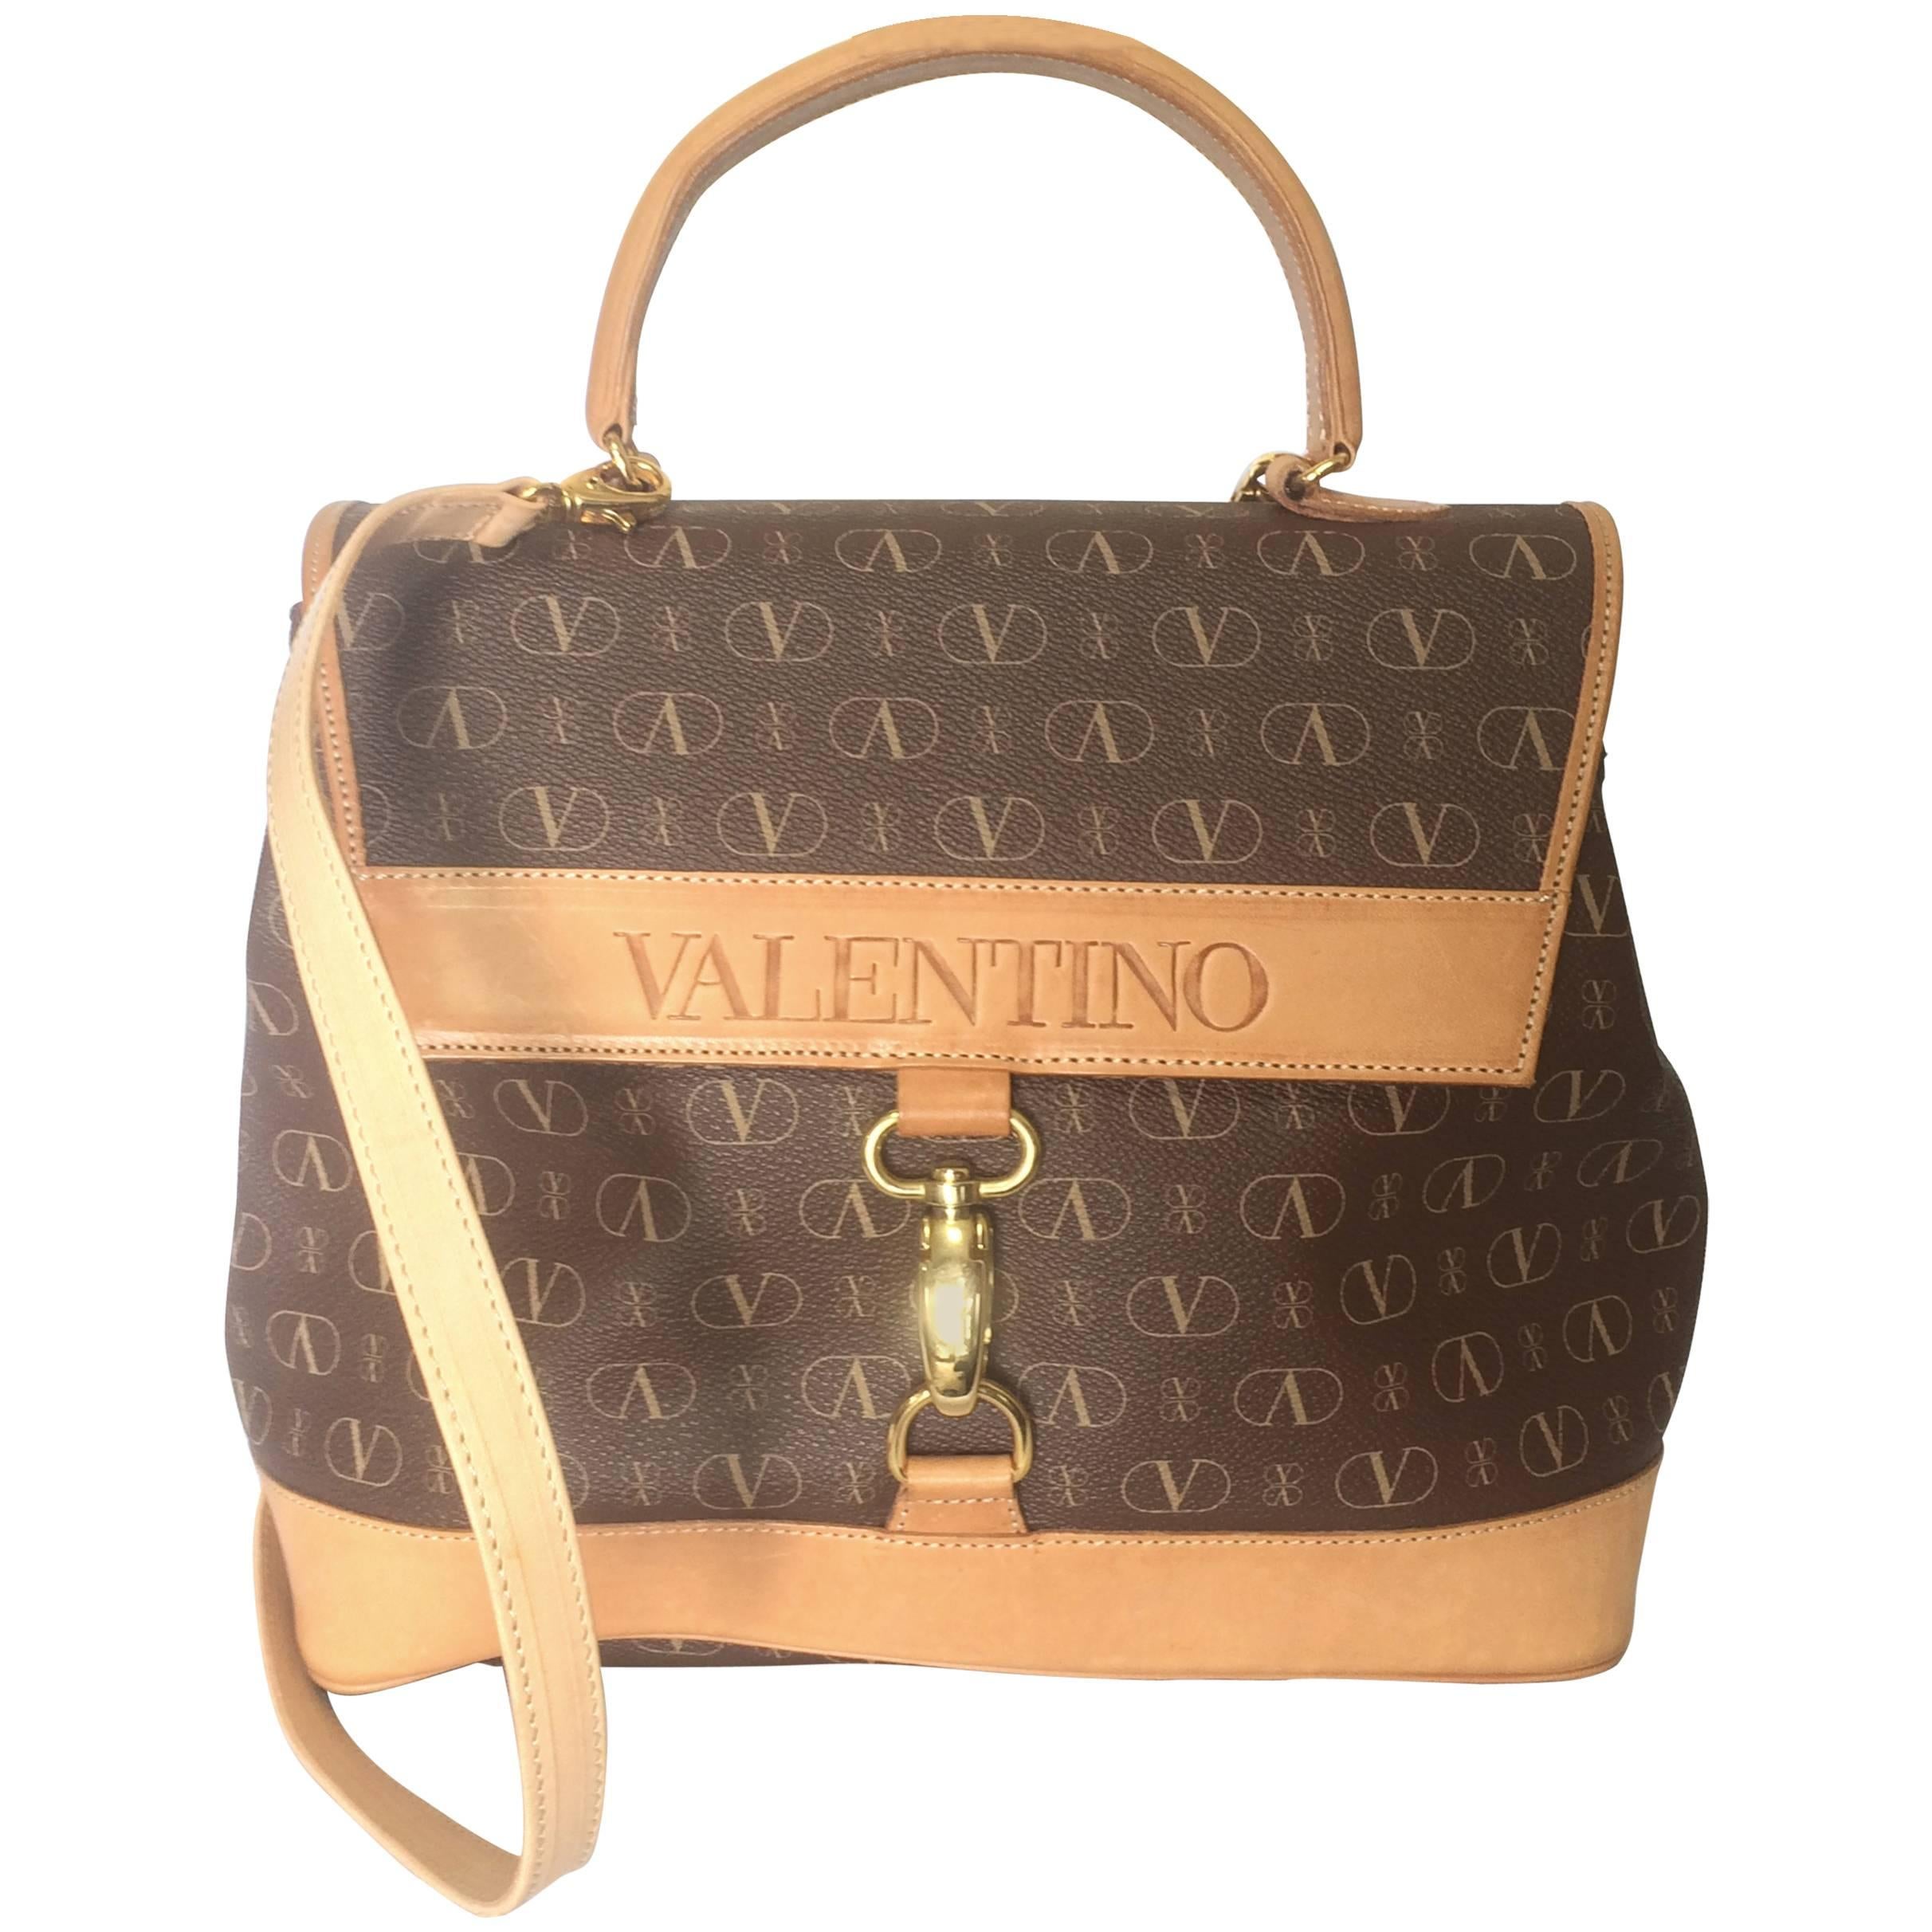 Vintage VALENTINO beige and brown shoulder handbag with leather handle and logo For Sale